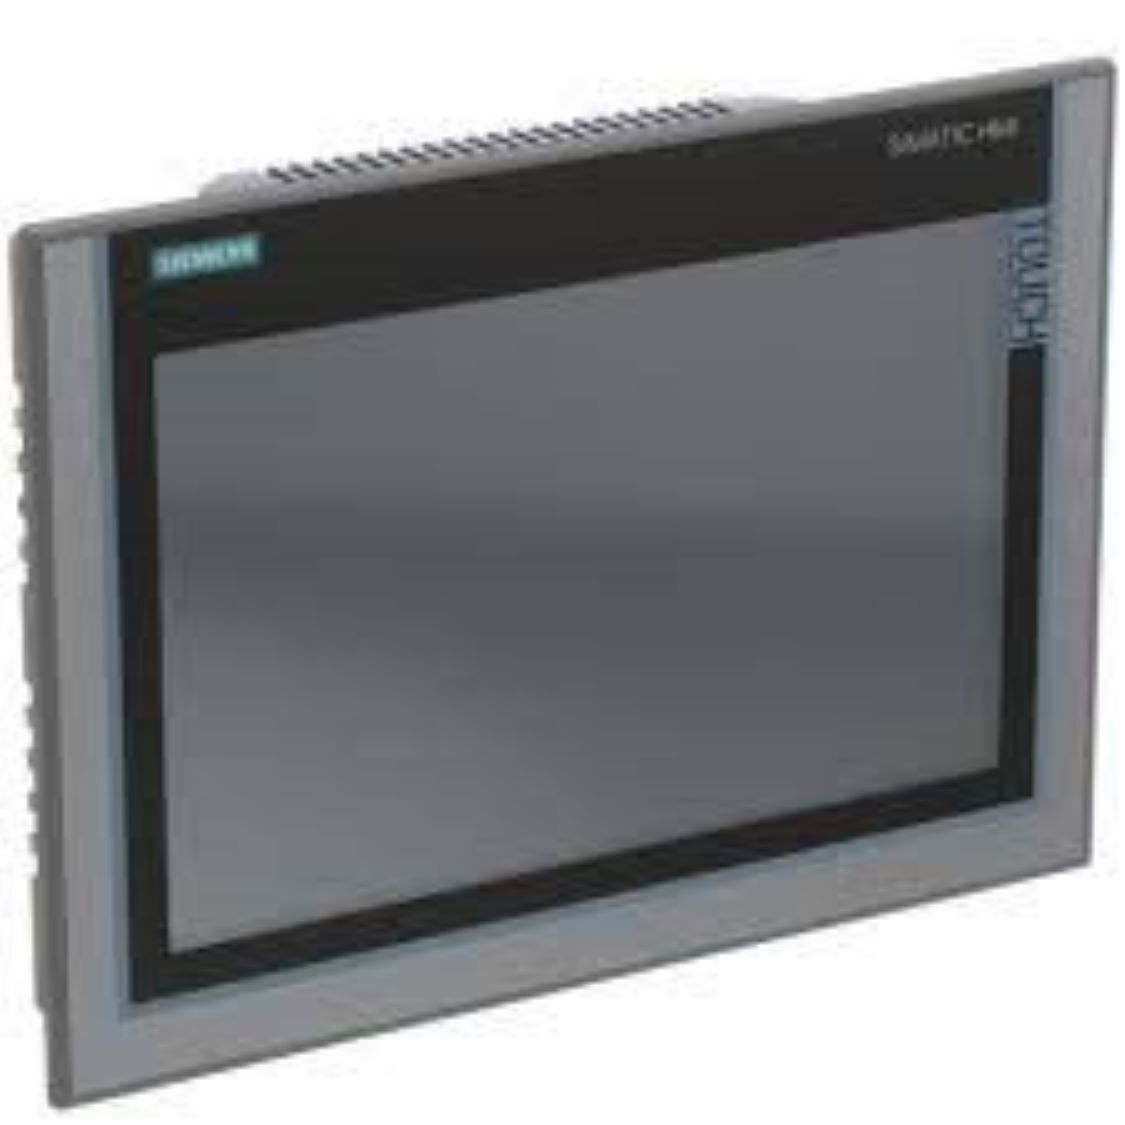 6AV2 124-0MC01-0AX0 -siemens programmable logic controller